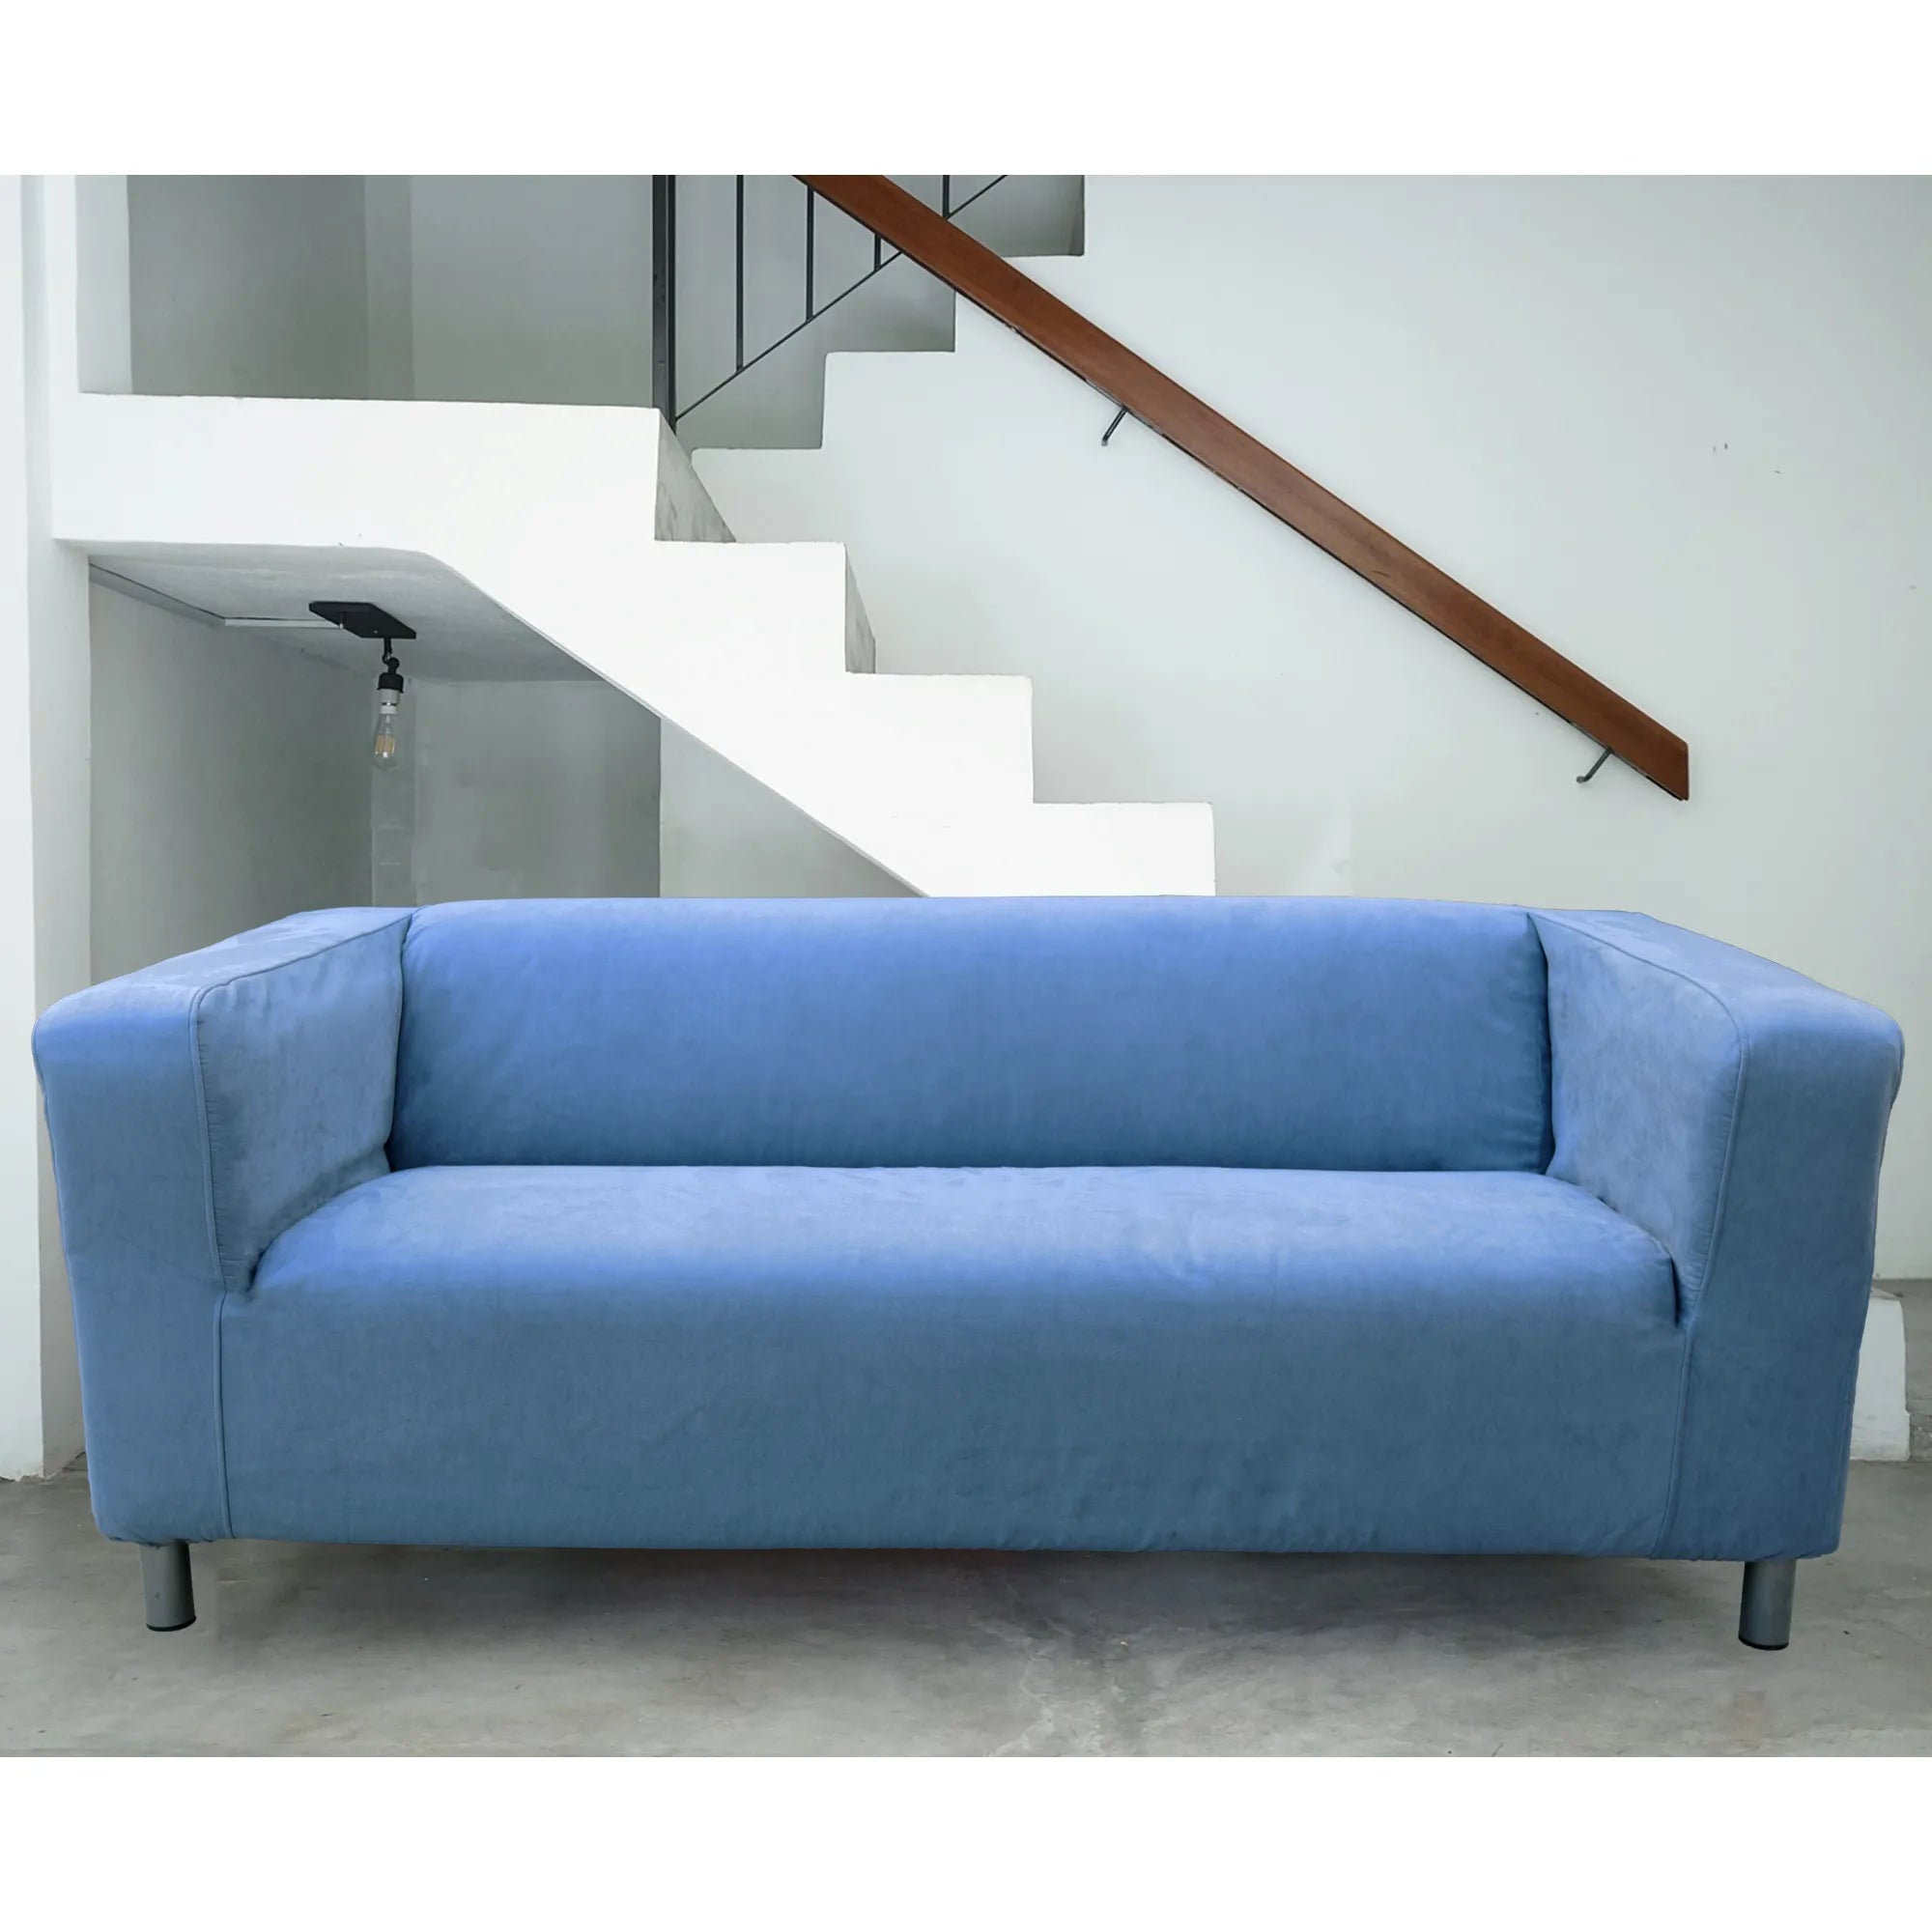 Ikea-Klippan-2-Seater-seat-Replacement-Sofa-cover-uk-free-shipping